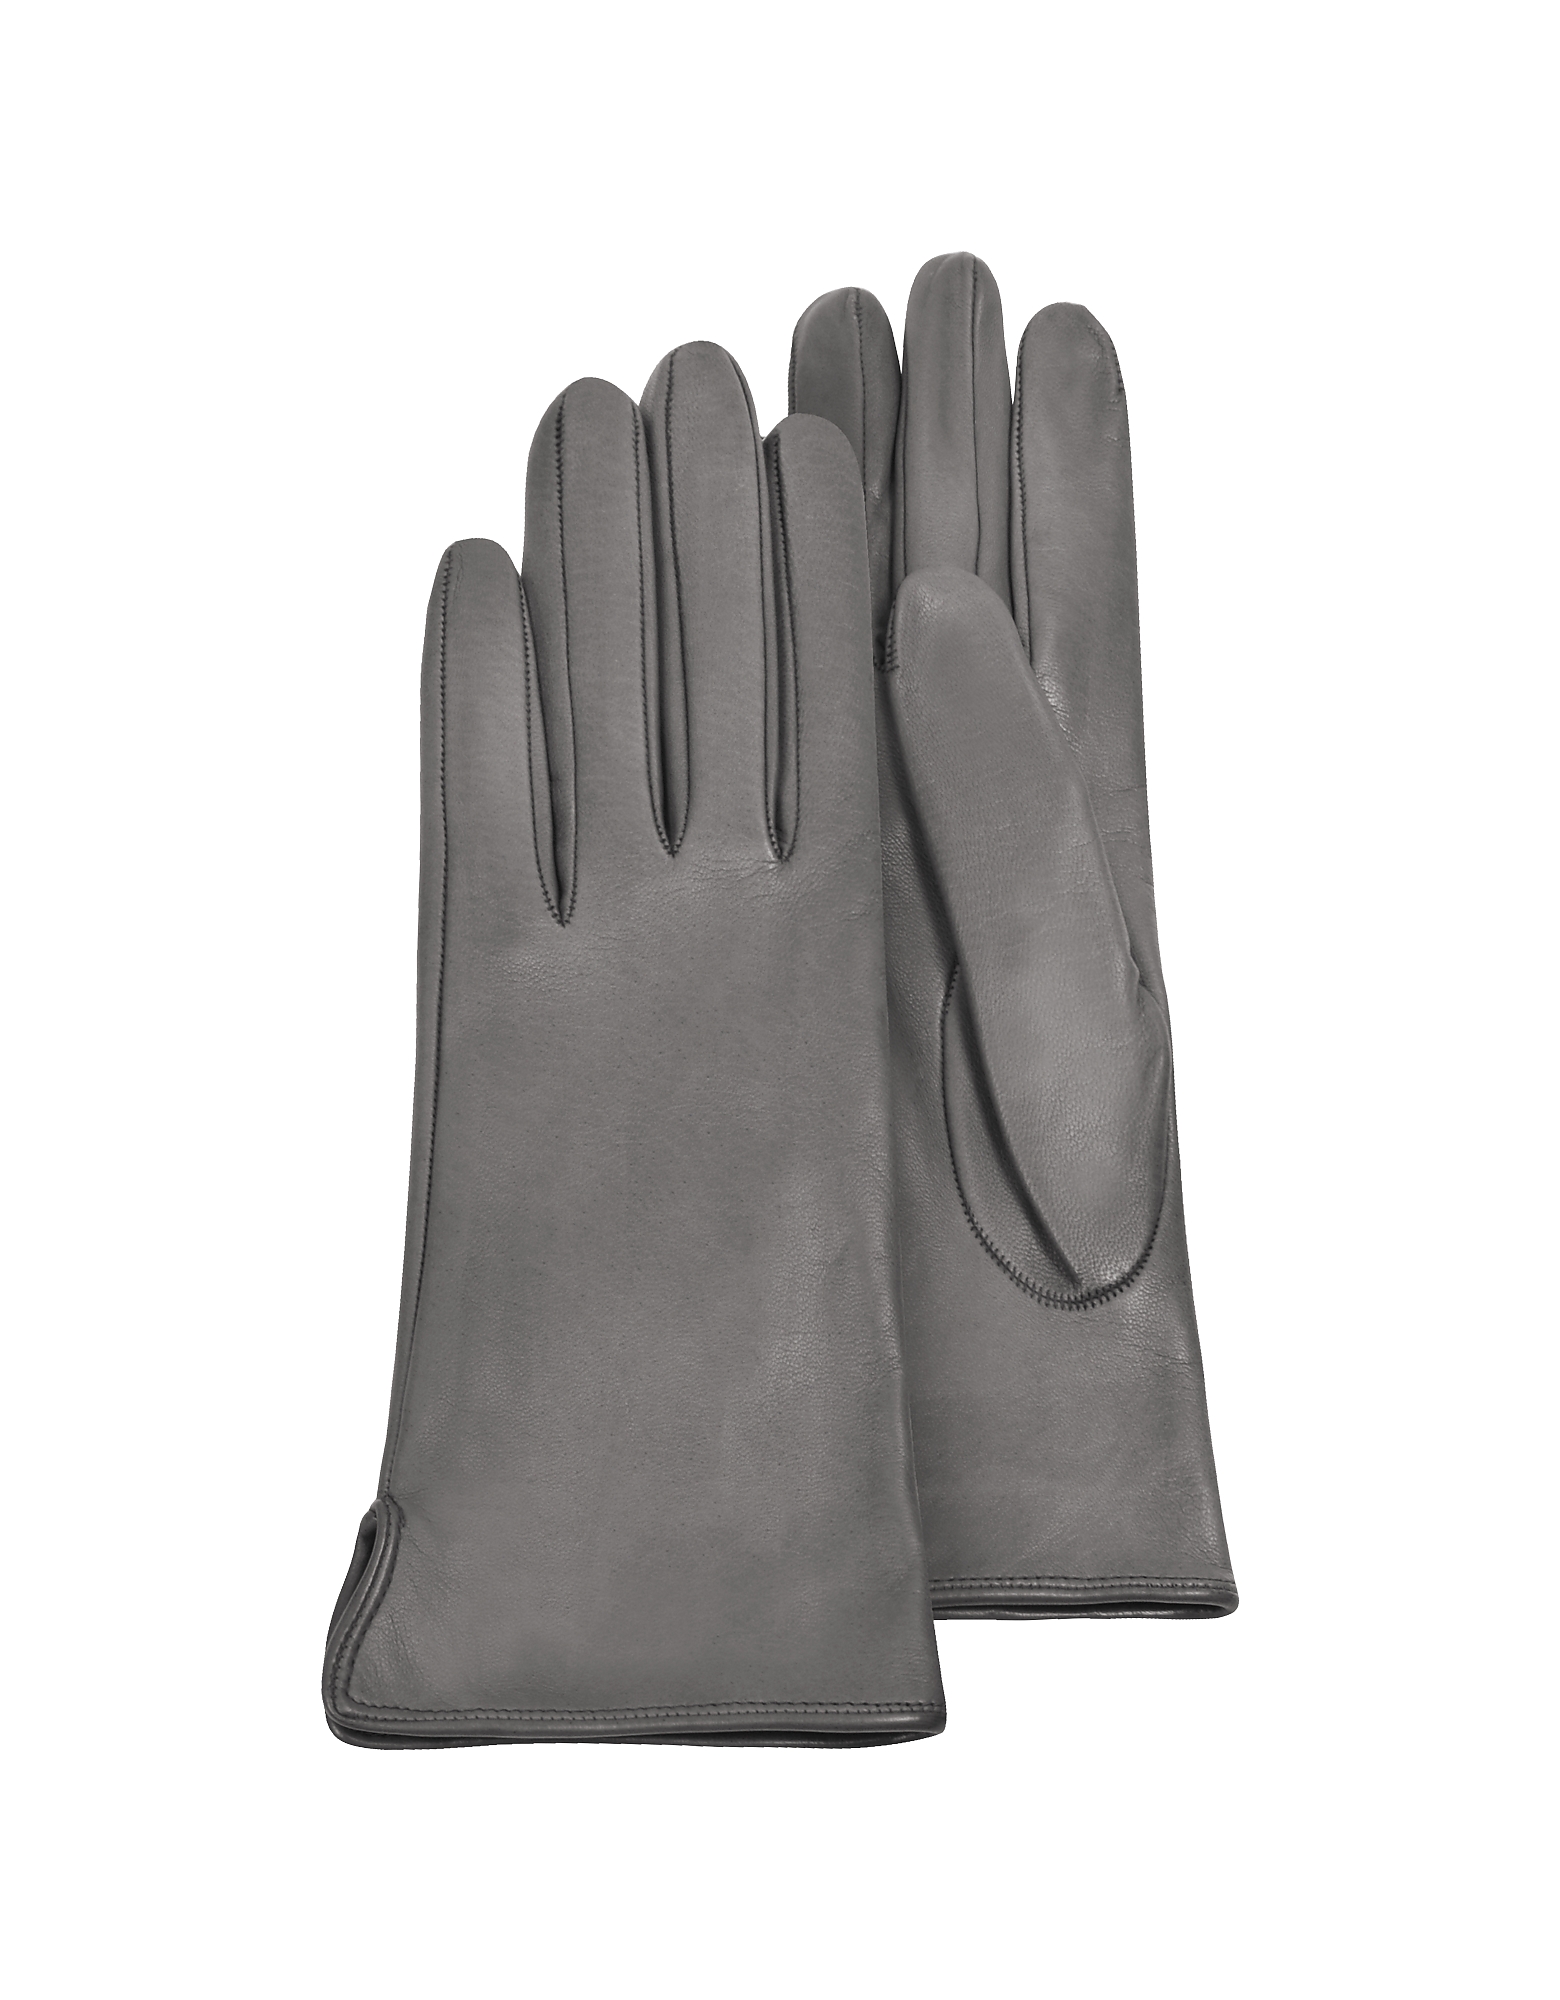 Forzieri Women's Gloves Women's Gray Calf Leather Gloves w/ Silk Lining